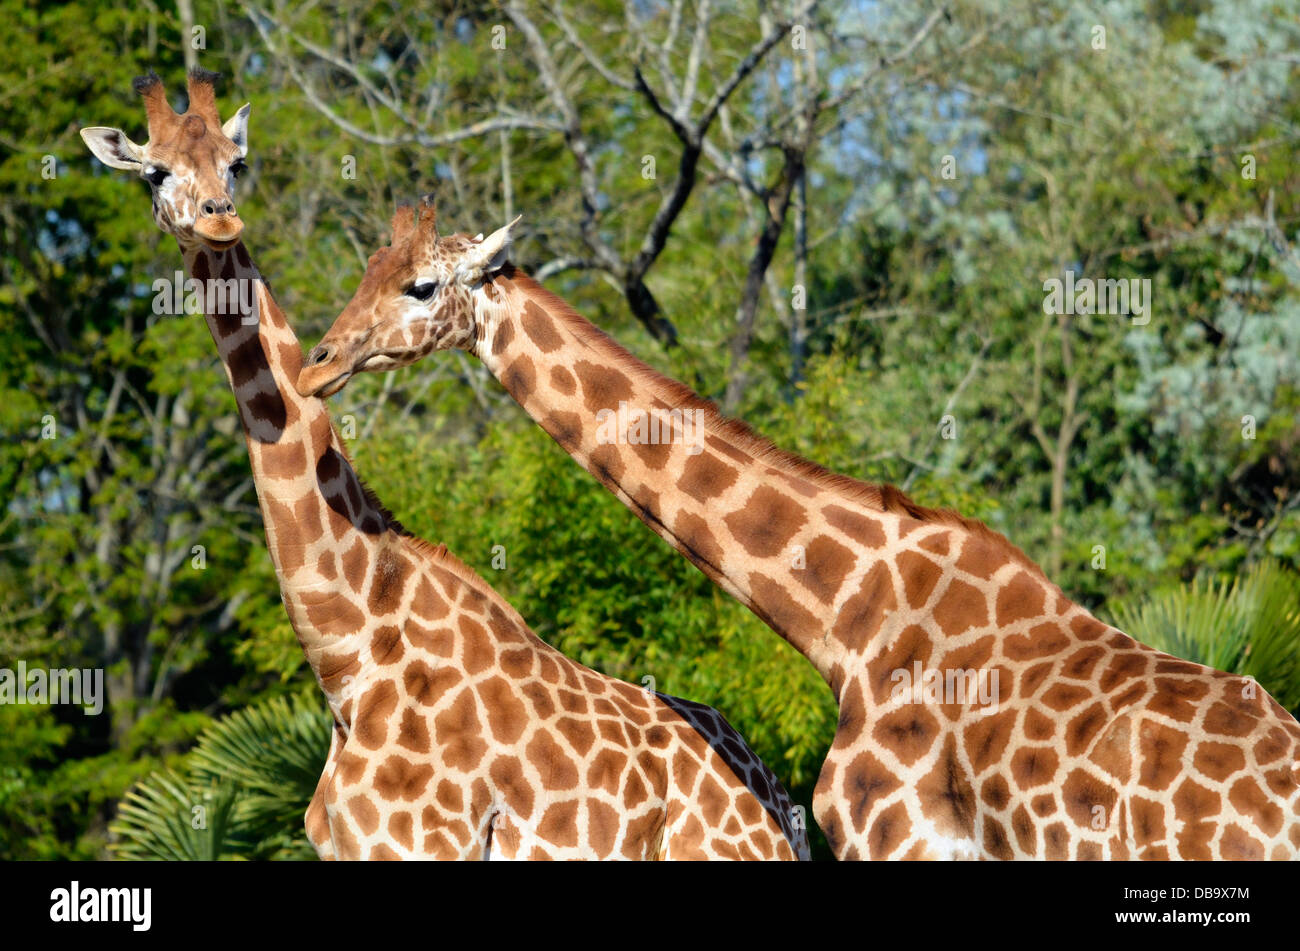 Closeup two giraffes (Giraffa camelopardalis) on green foliage background Stock Photo